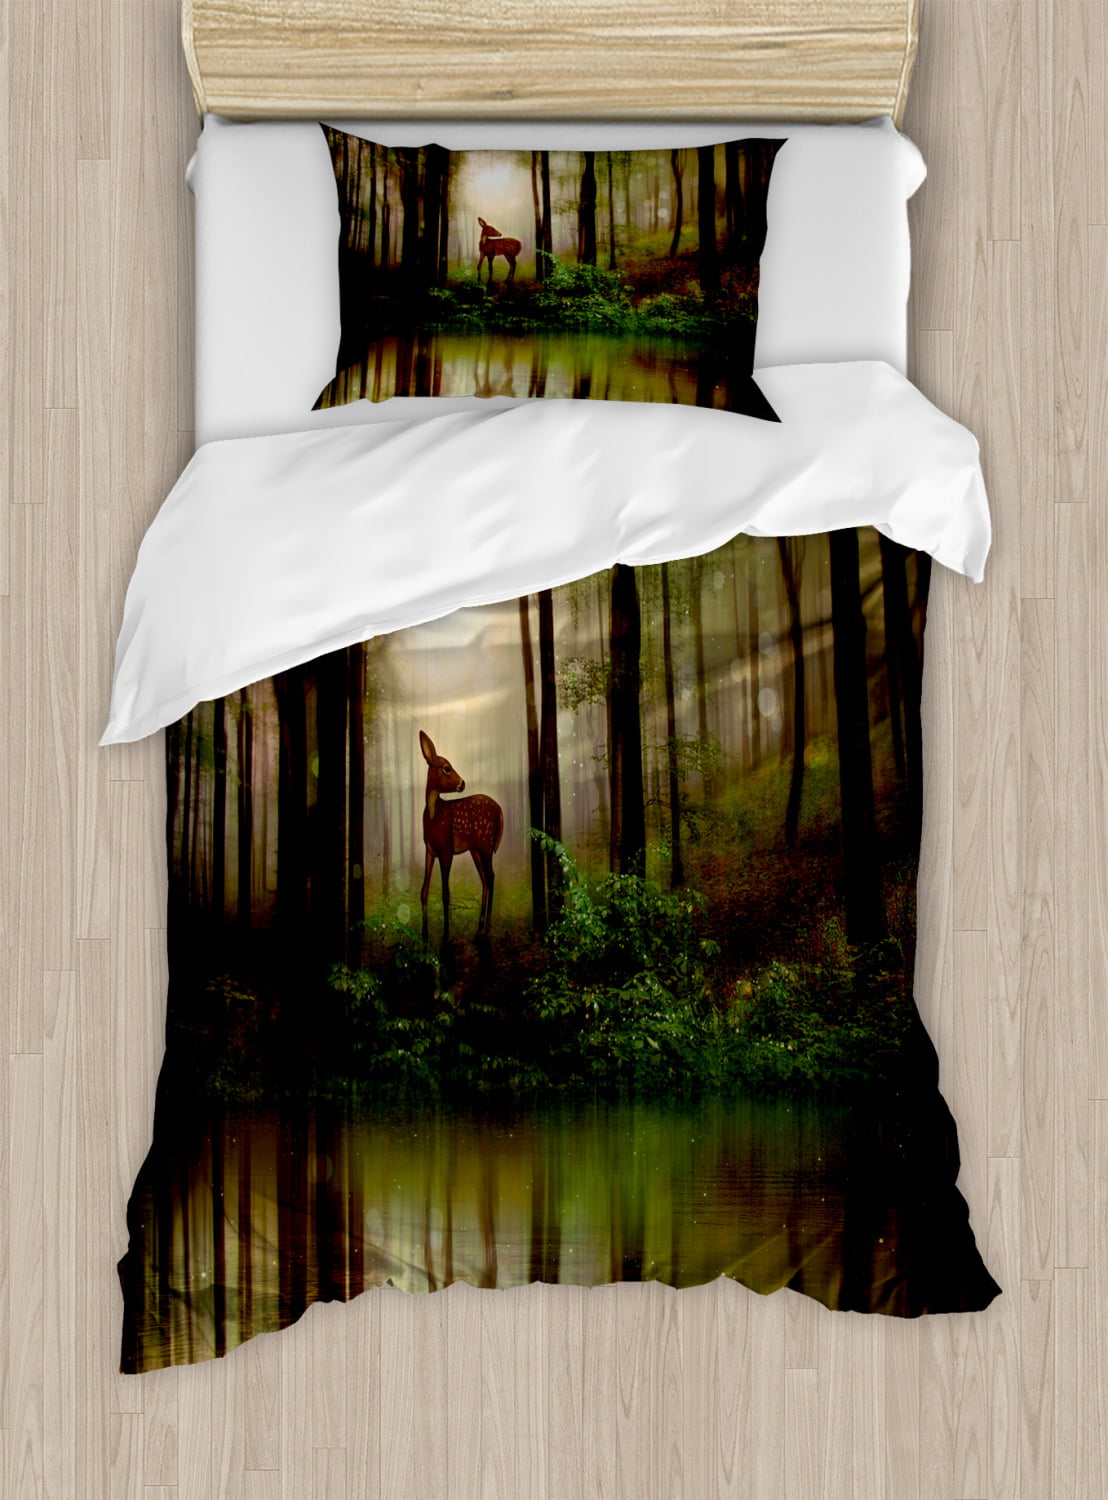 Minalo Duvet Cover Set Beige,Forest Baby Deer Foggy Lake Print,Decorative 3 Piece Bedding Set with 2 Pillow Shams King Size 